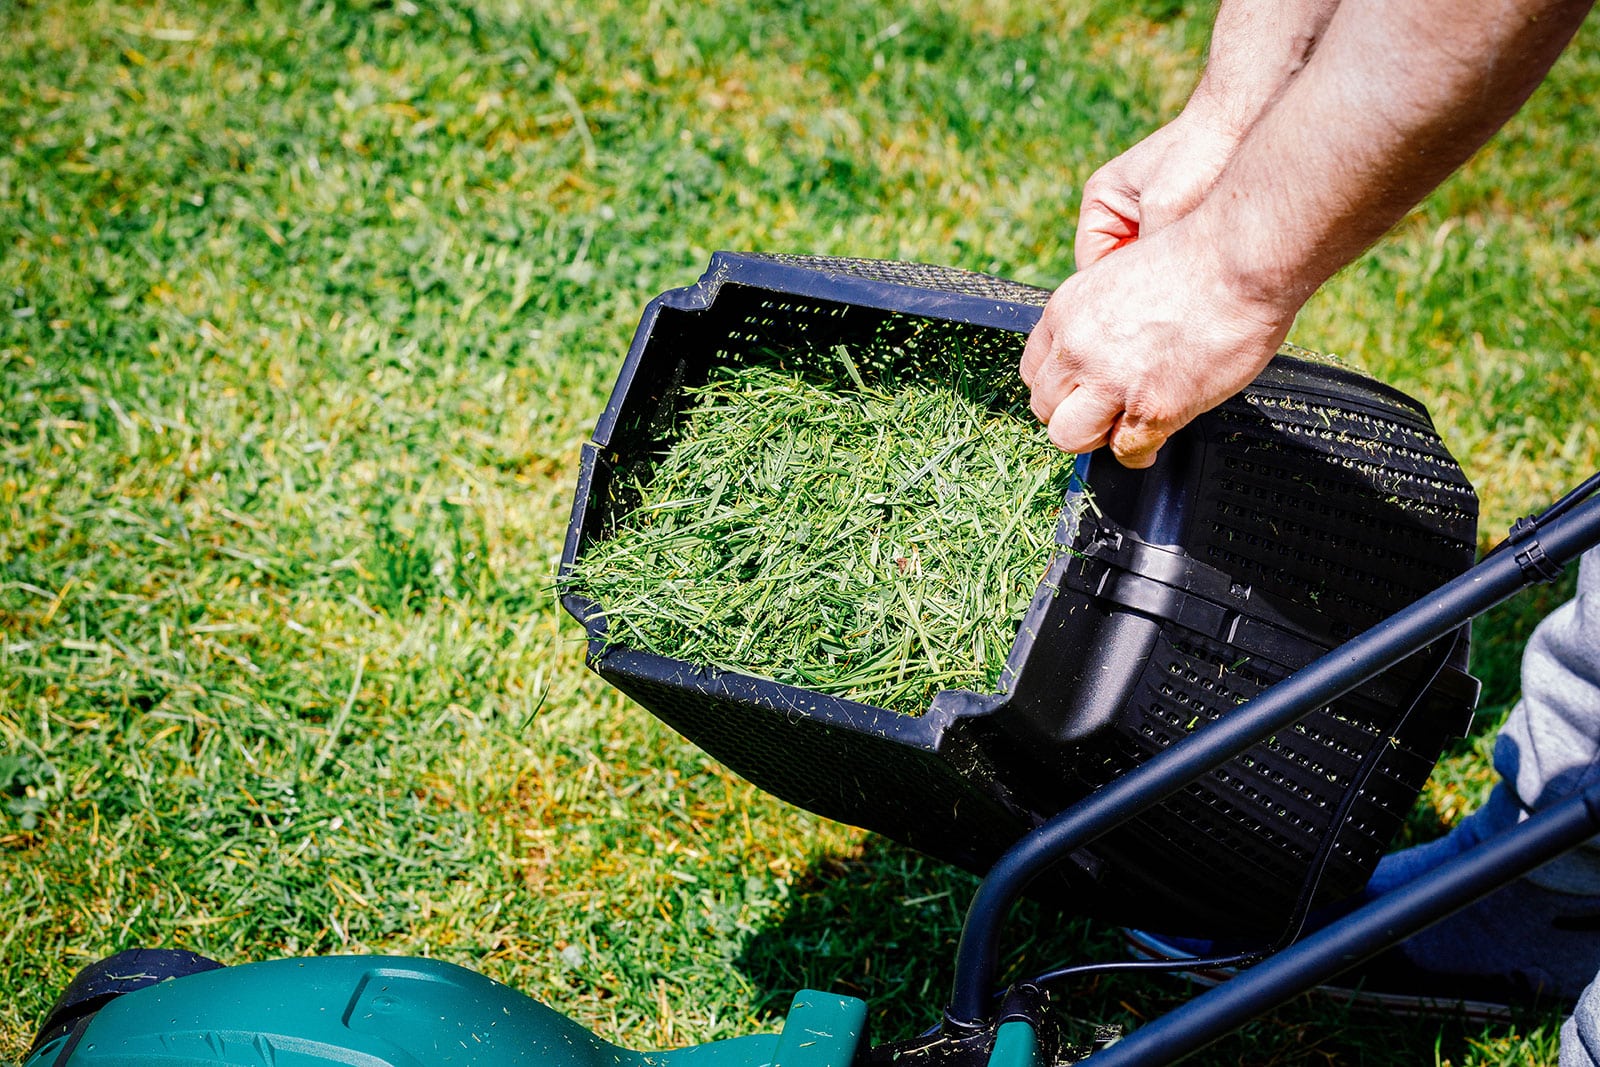 Man's hands picking up a grass catcher bin full of grass clippings from a lawn mower